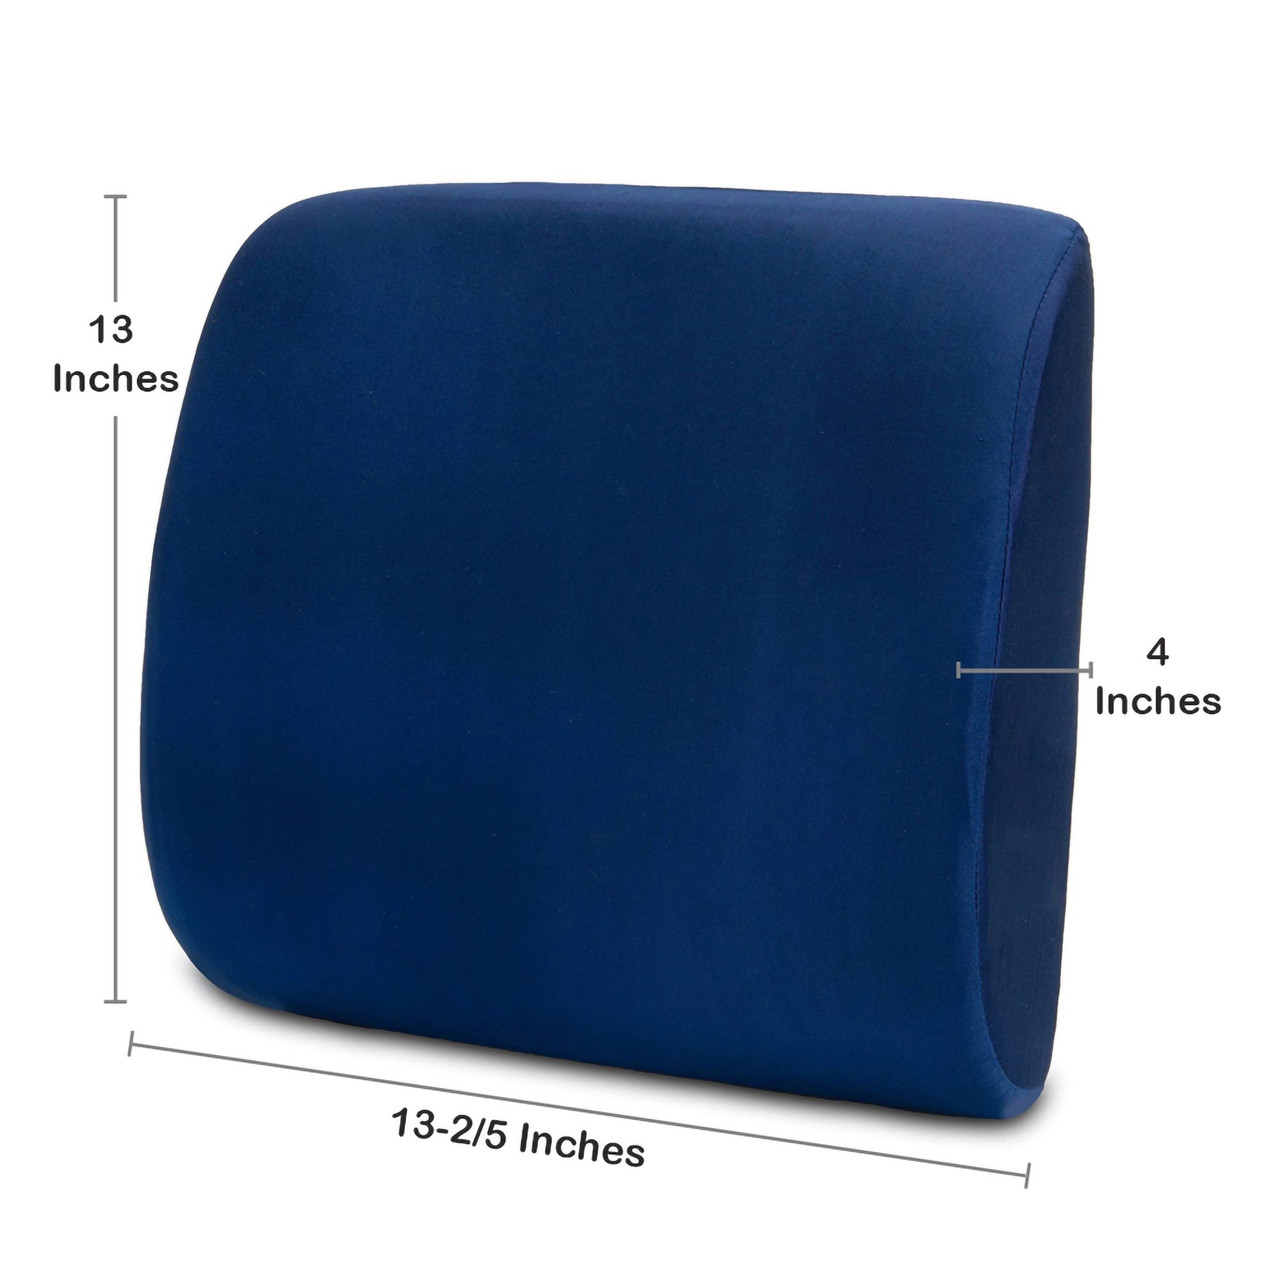 McKesson Coccyx Support Seat Cushion - Compressed, Foam, Blue